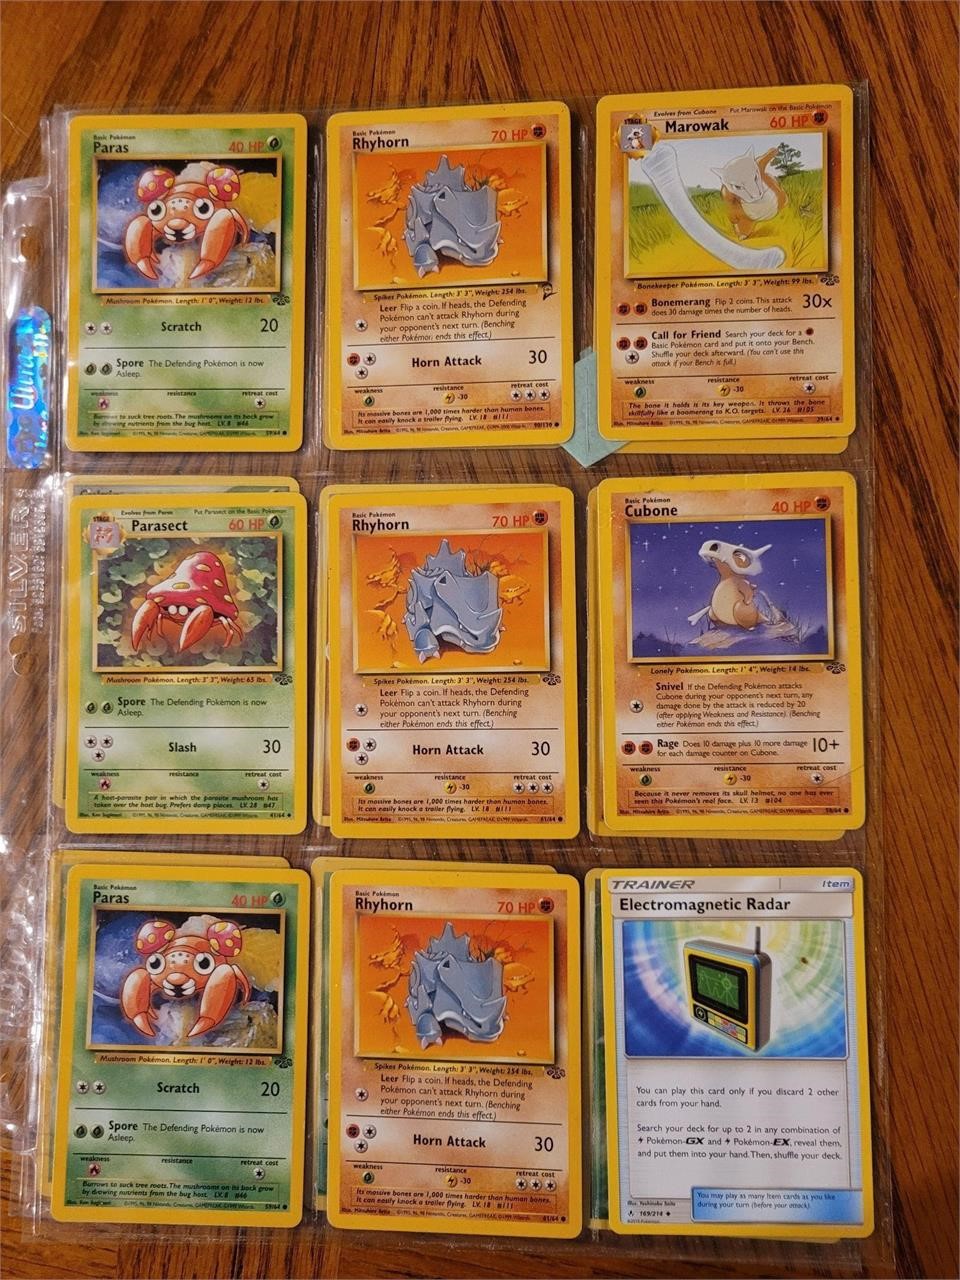 (9) Pokemon Cards